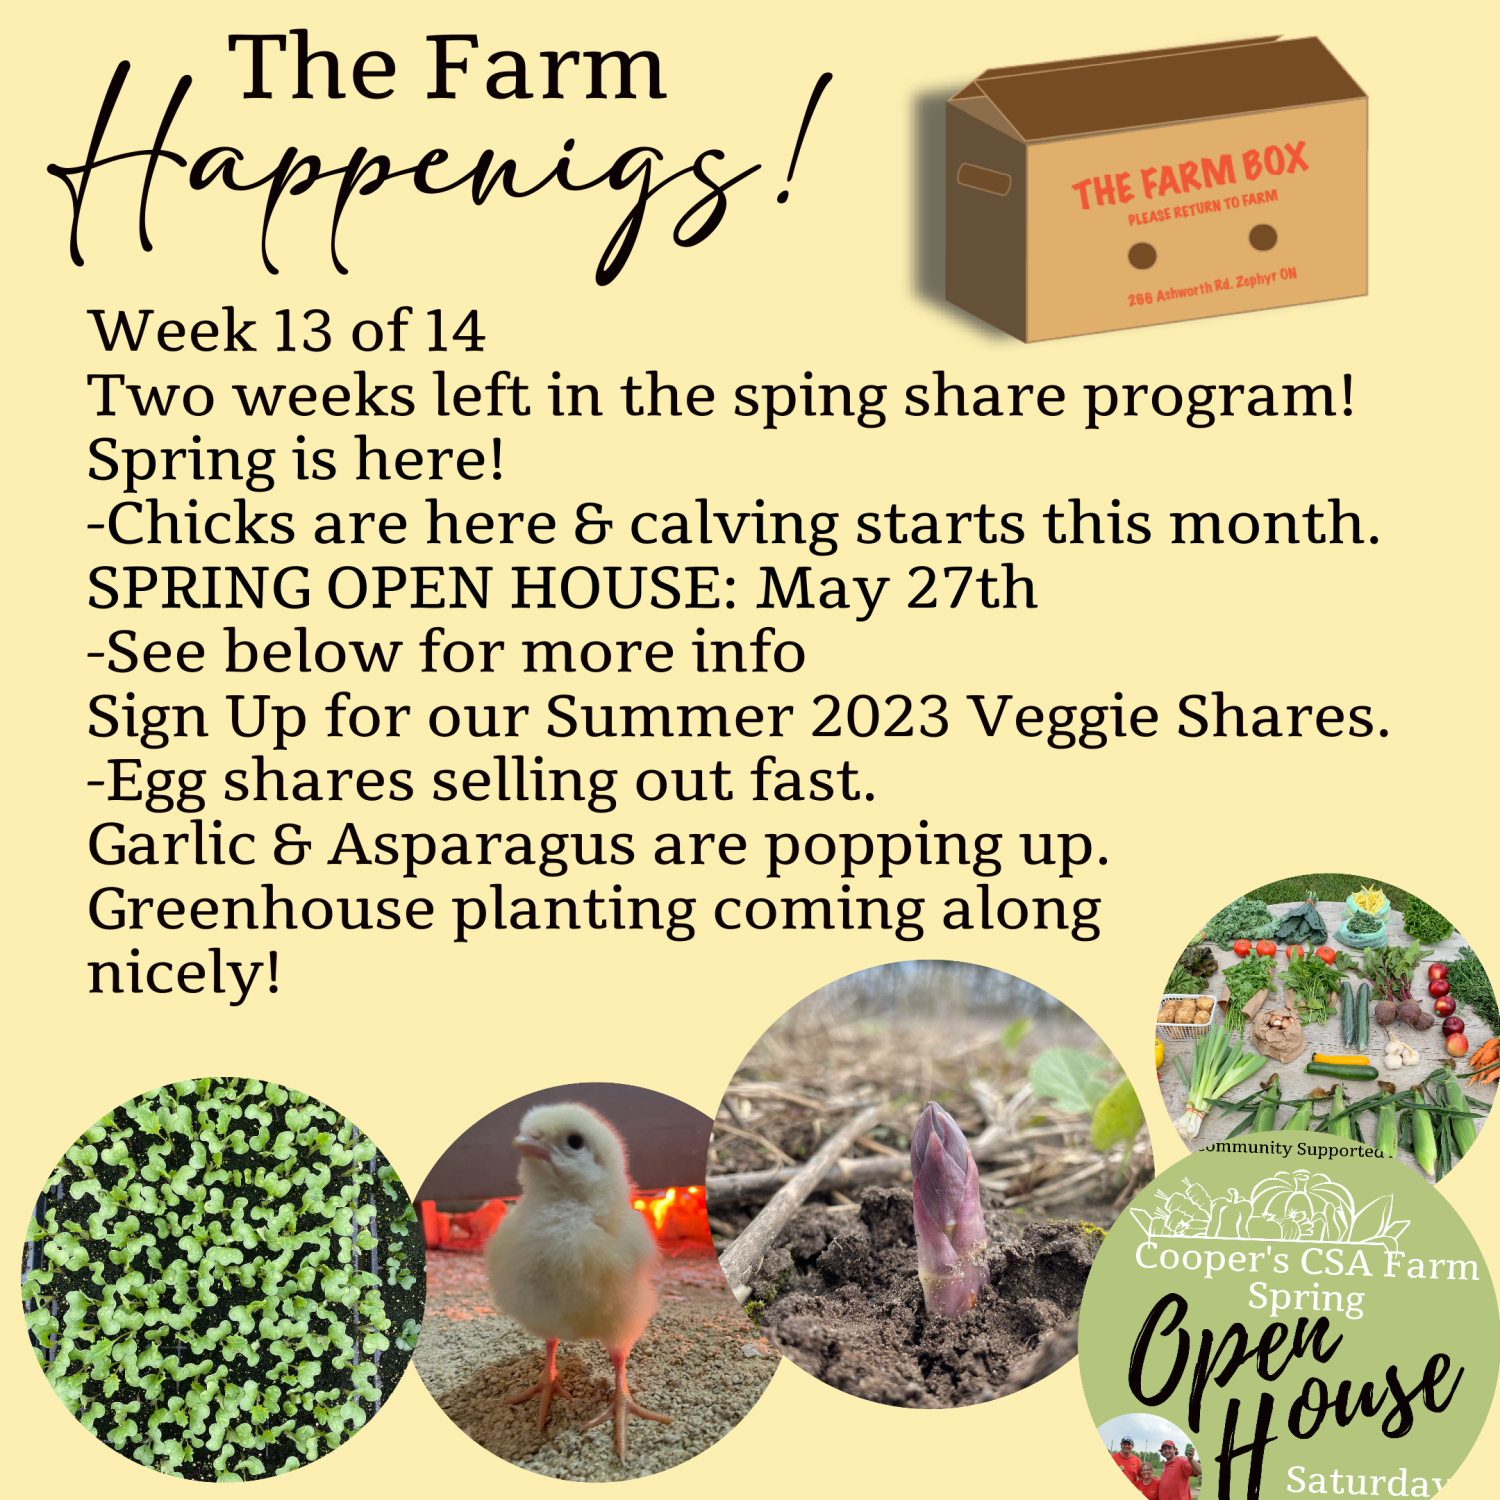 Previous Happening: "The Farm Box"-Coopers CSA Farm Farm Happenings Week 13